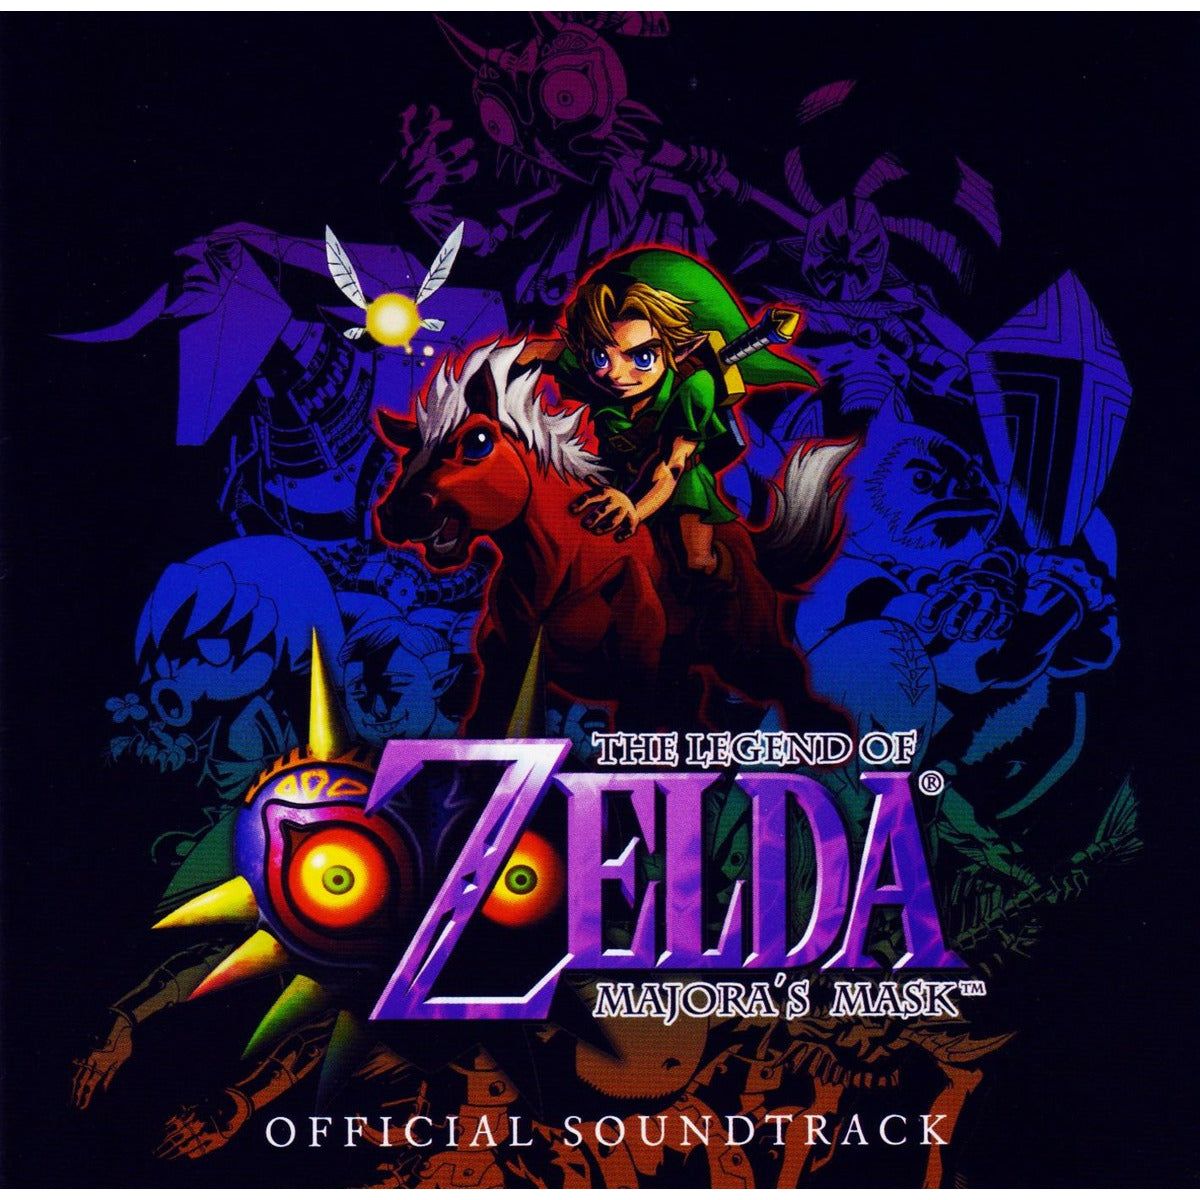 CD - Bande originale officielle de The Legend of Zelda Majora's Mask (scellée)